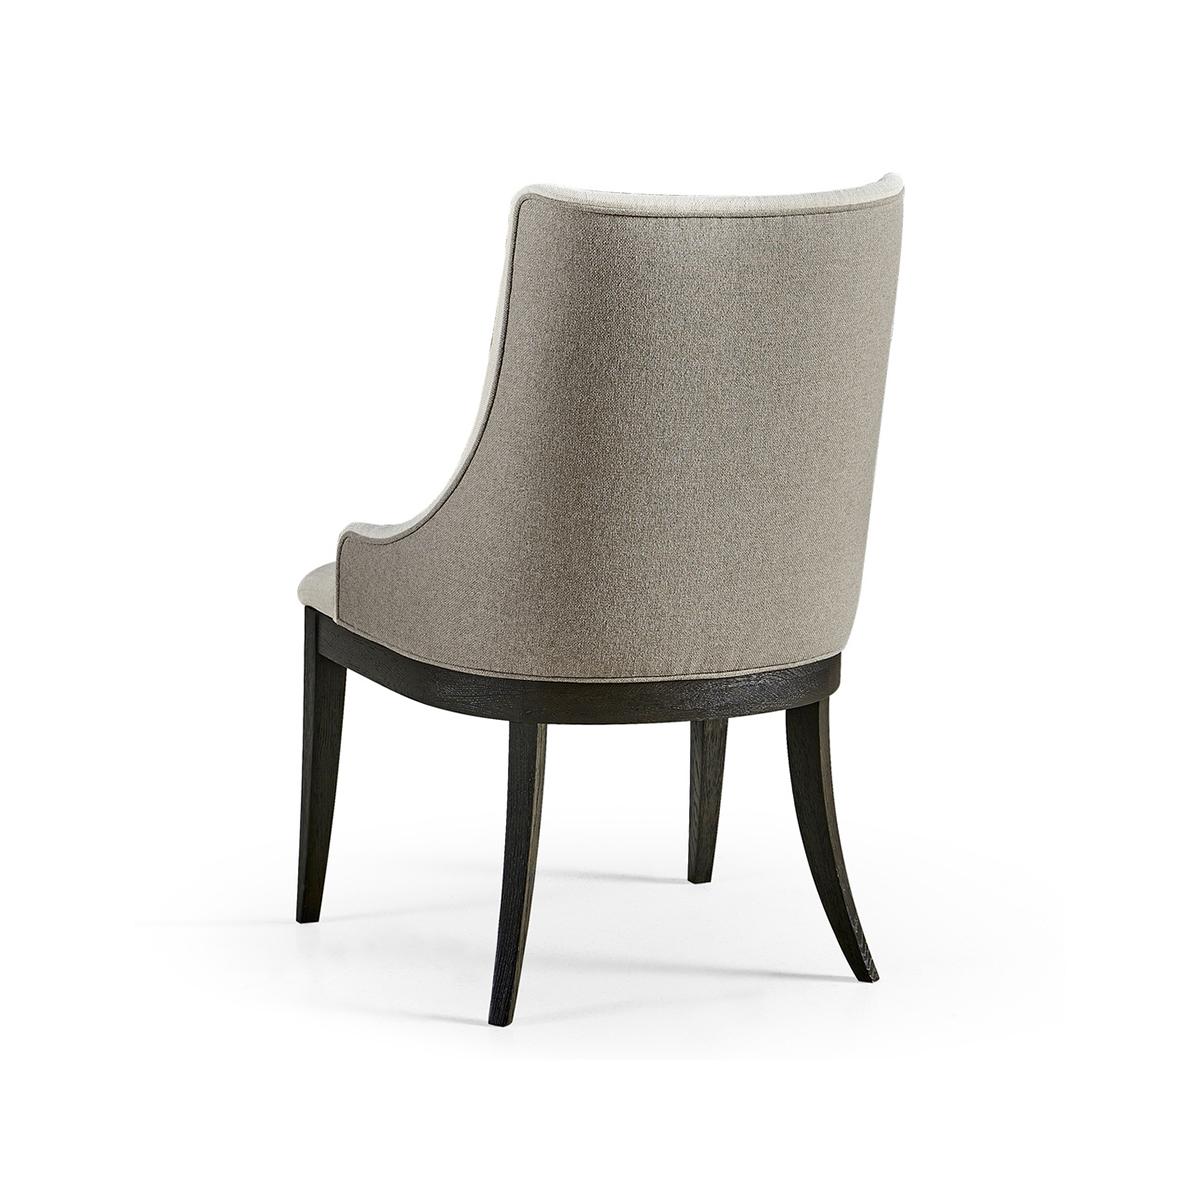 Vietnamese Mid-Century Modern Upholstered Side Chair For Sale